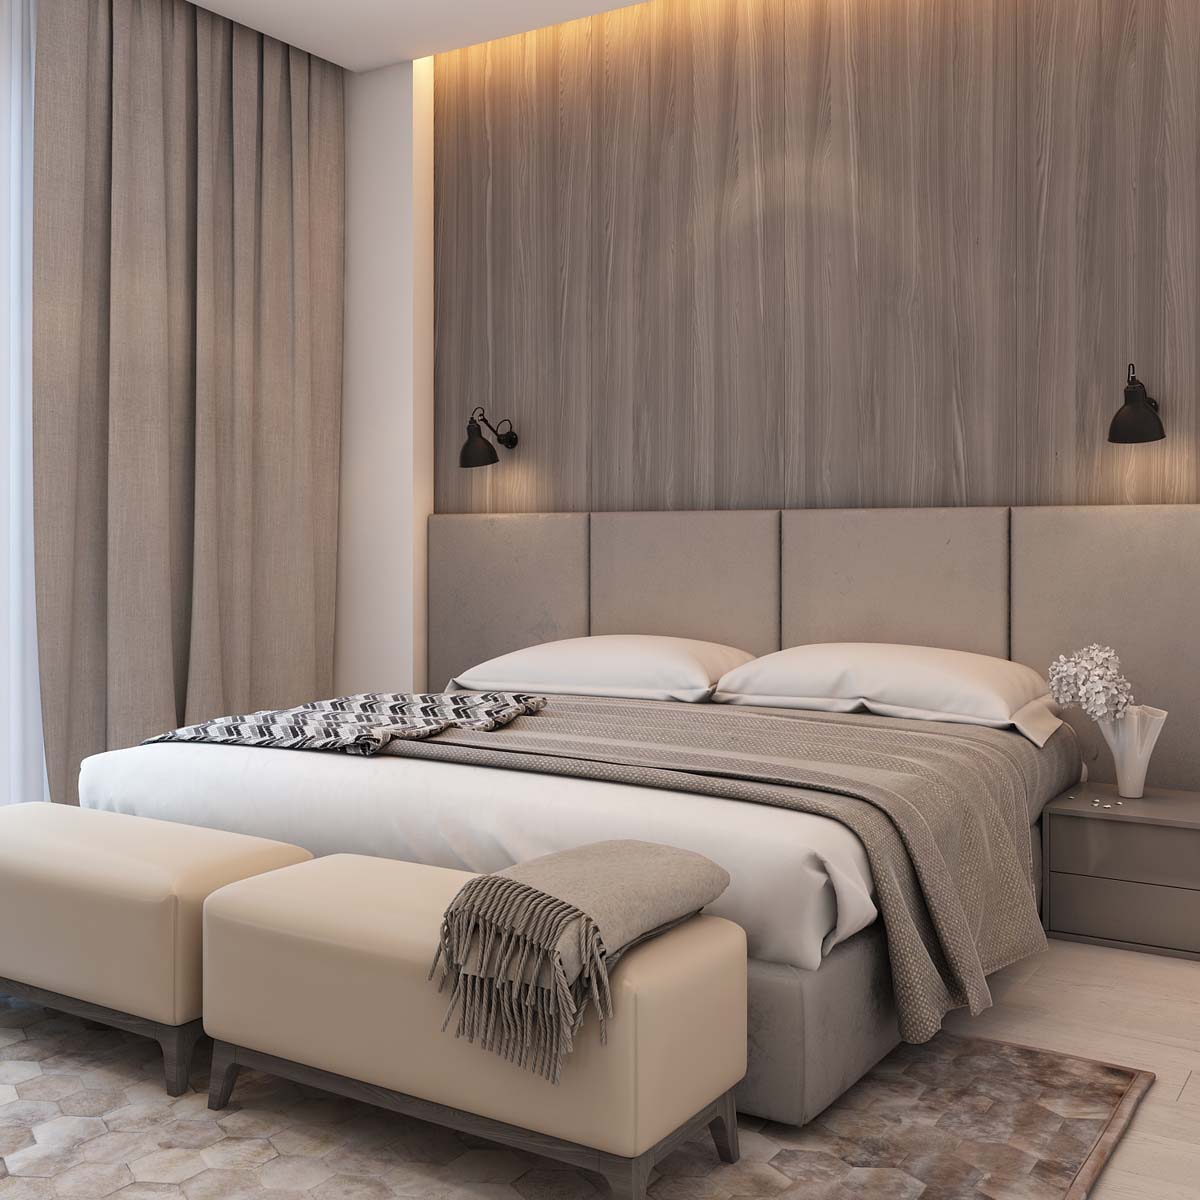 simple-bedroom-design with wooden